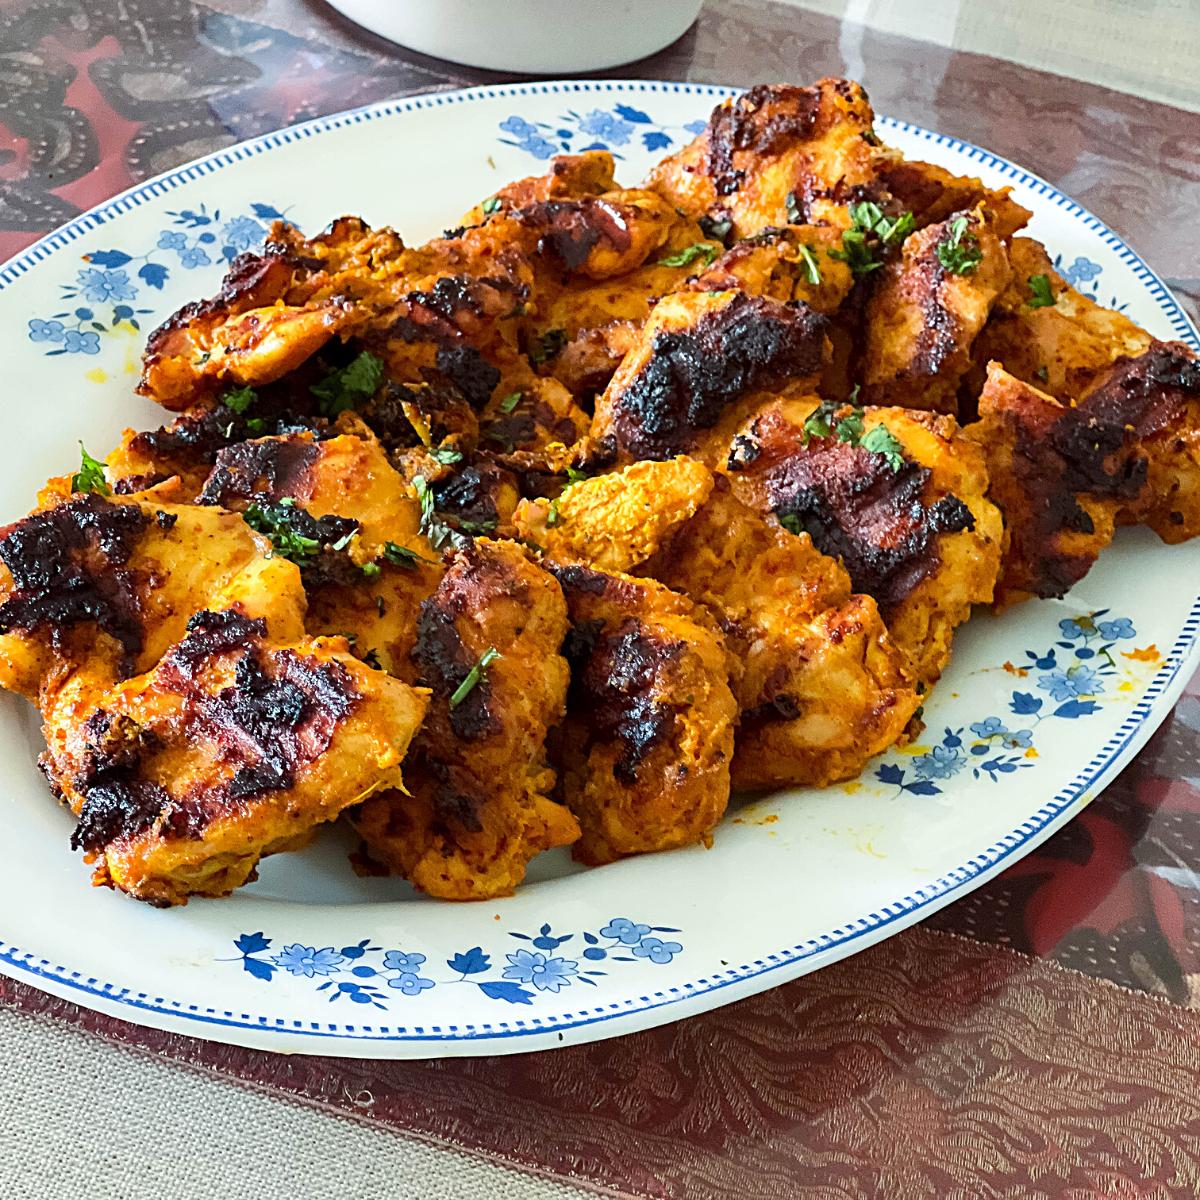 A platter of grilled tandoori chicken.